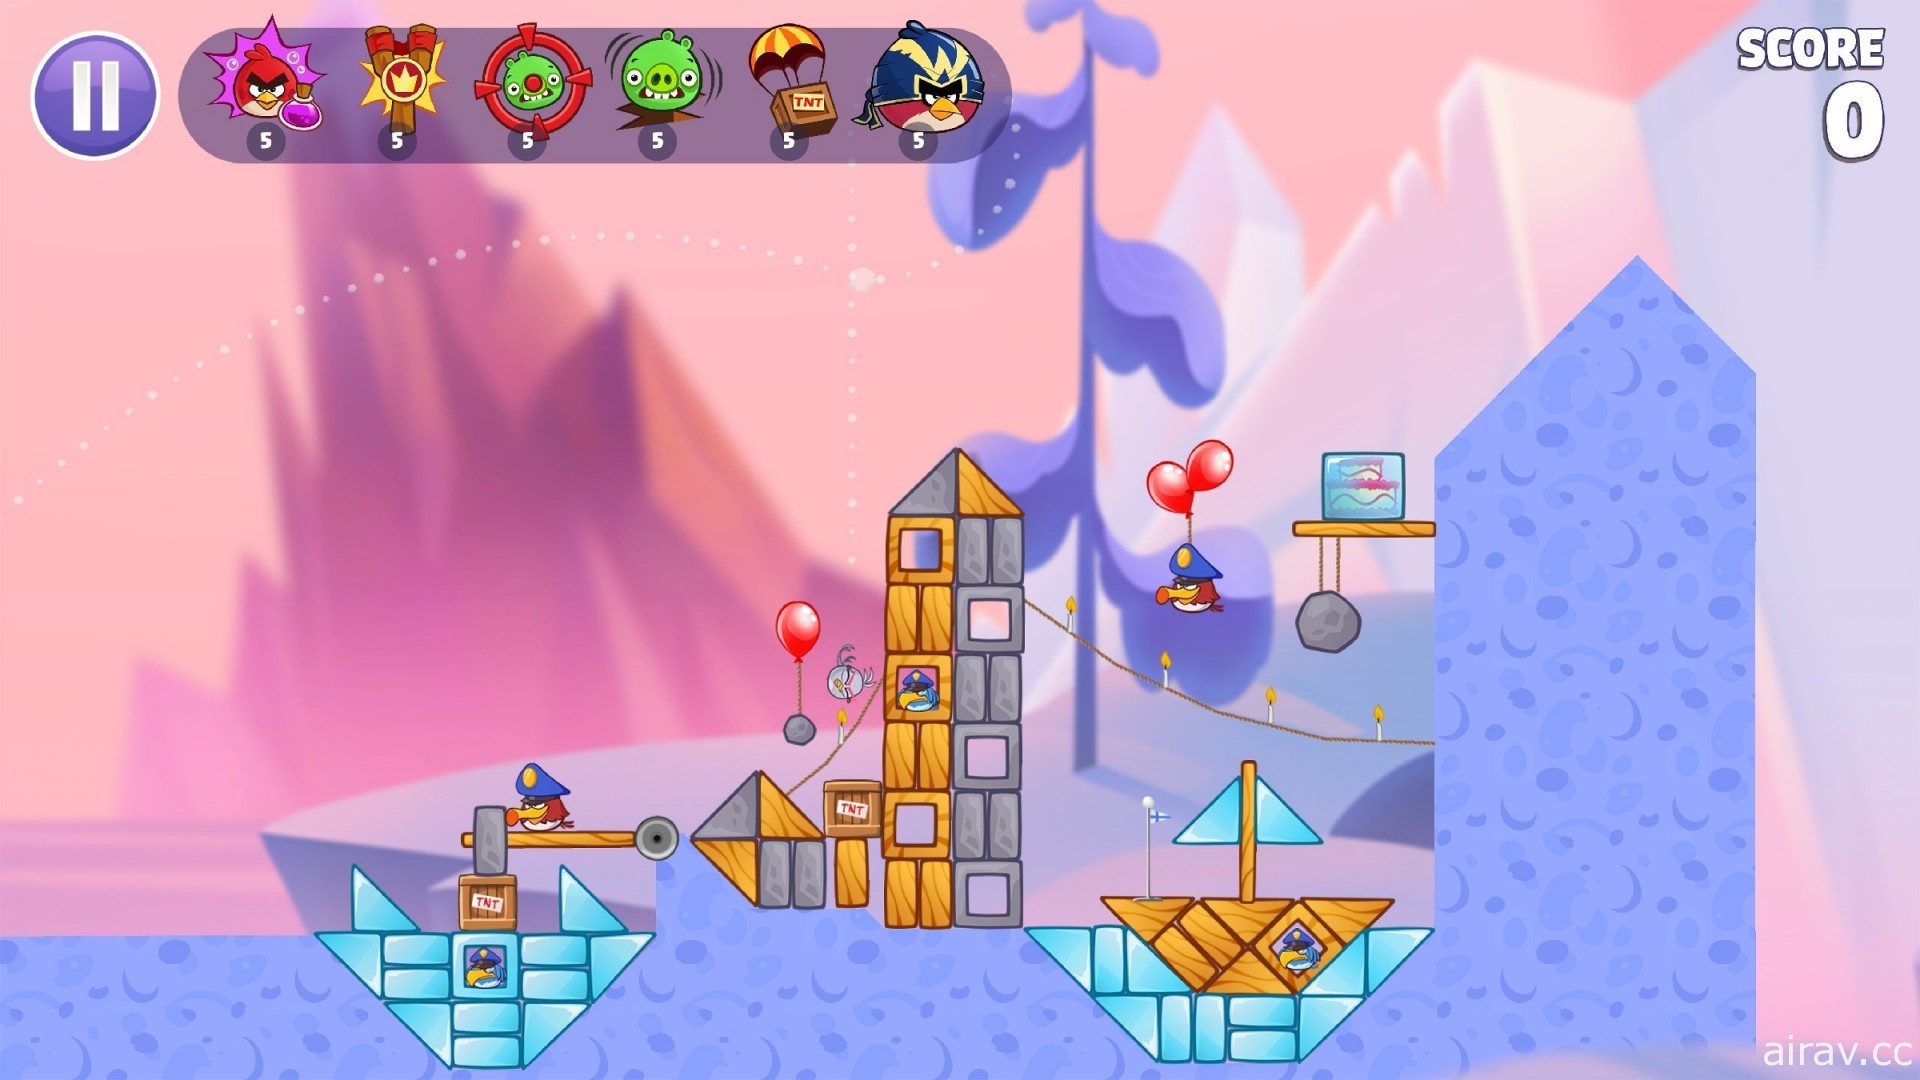 Apple Arcade 釋出《Angry Birds Reloaded》等新作預告 一起在家打 game 抗疫